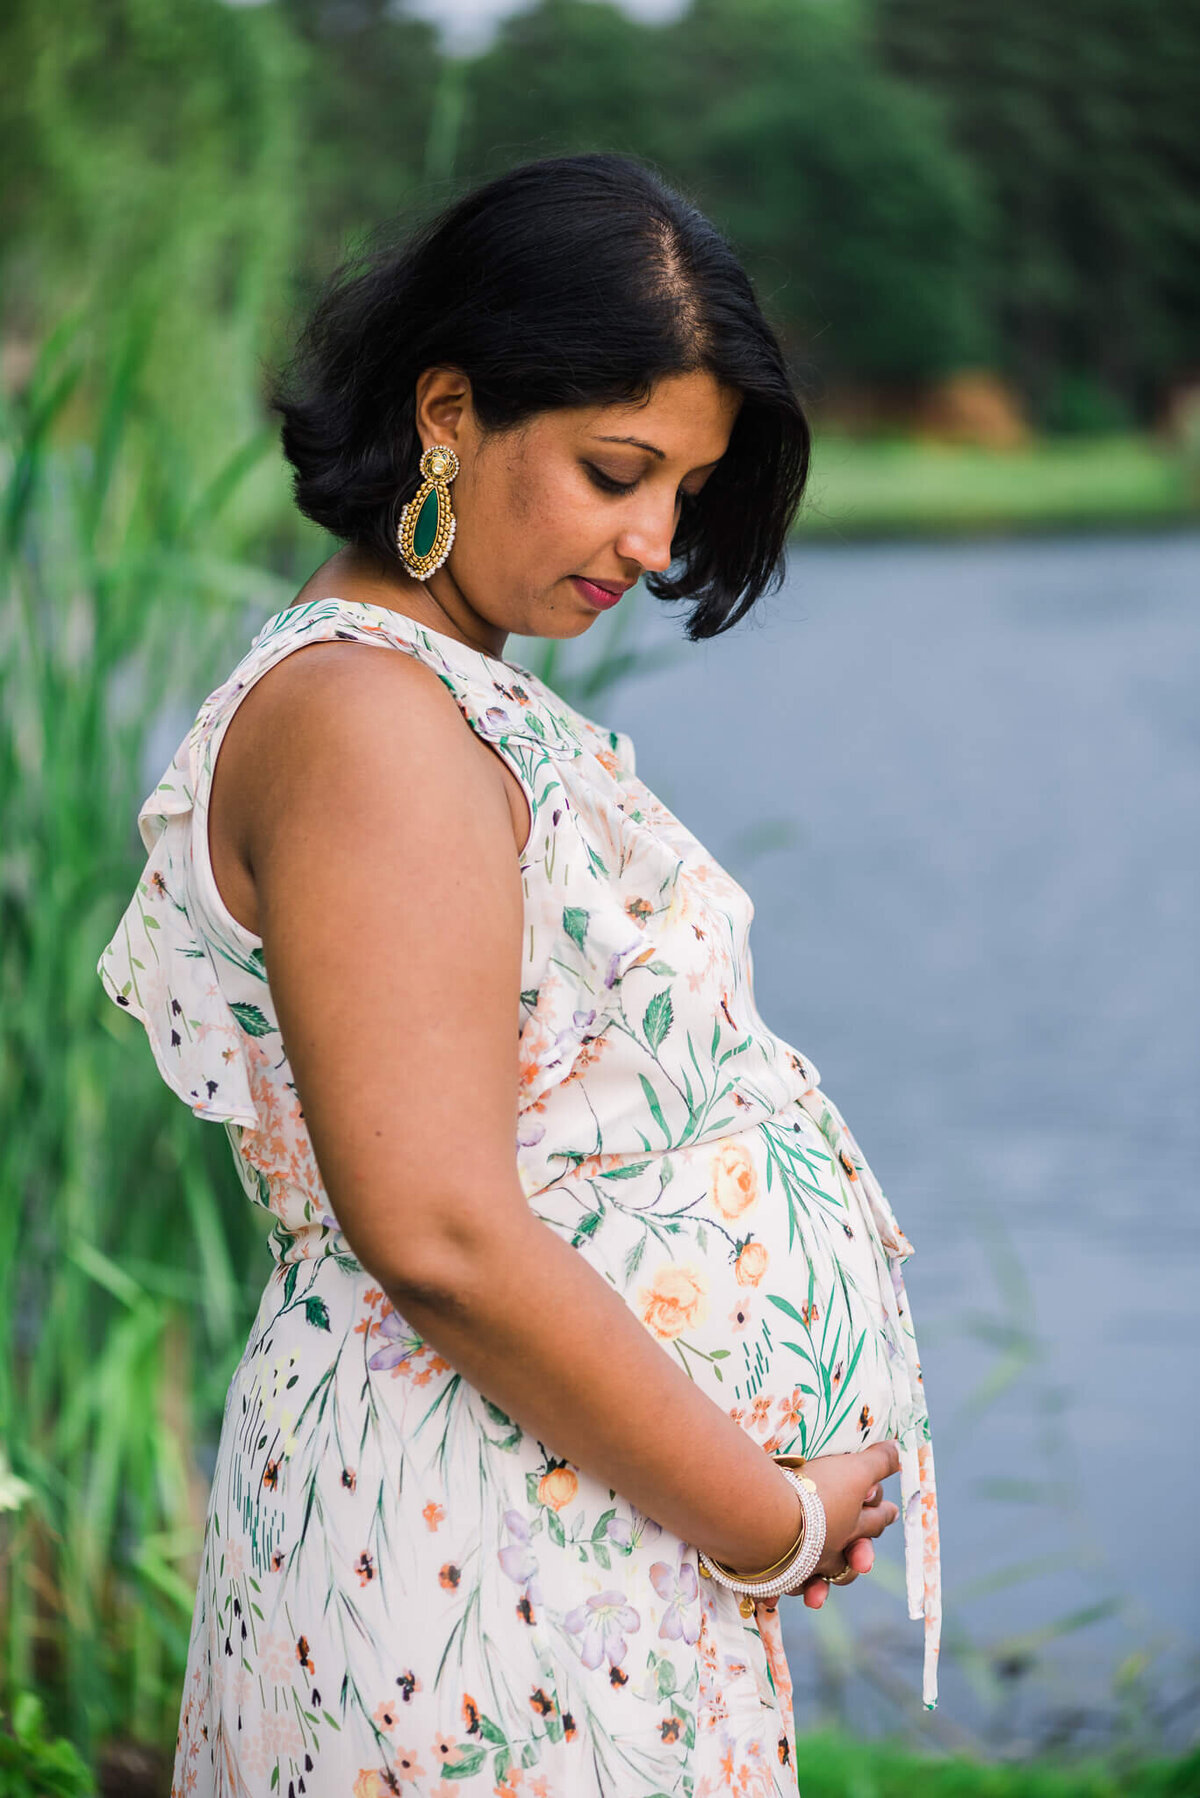 A pregnant mama gazingtenderly at her bump